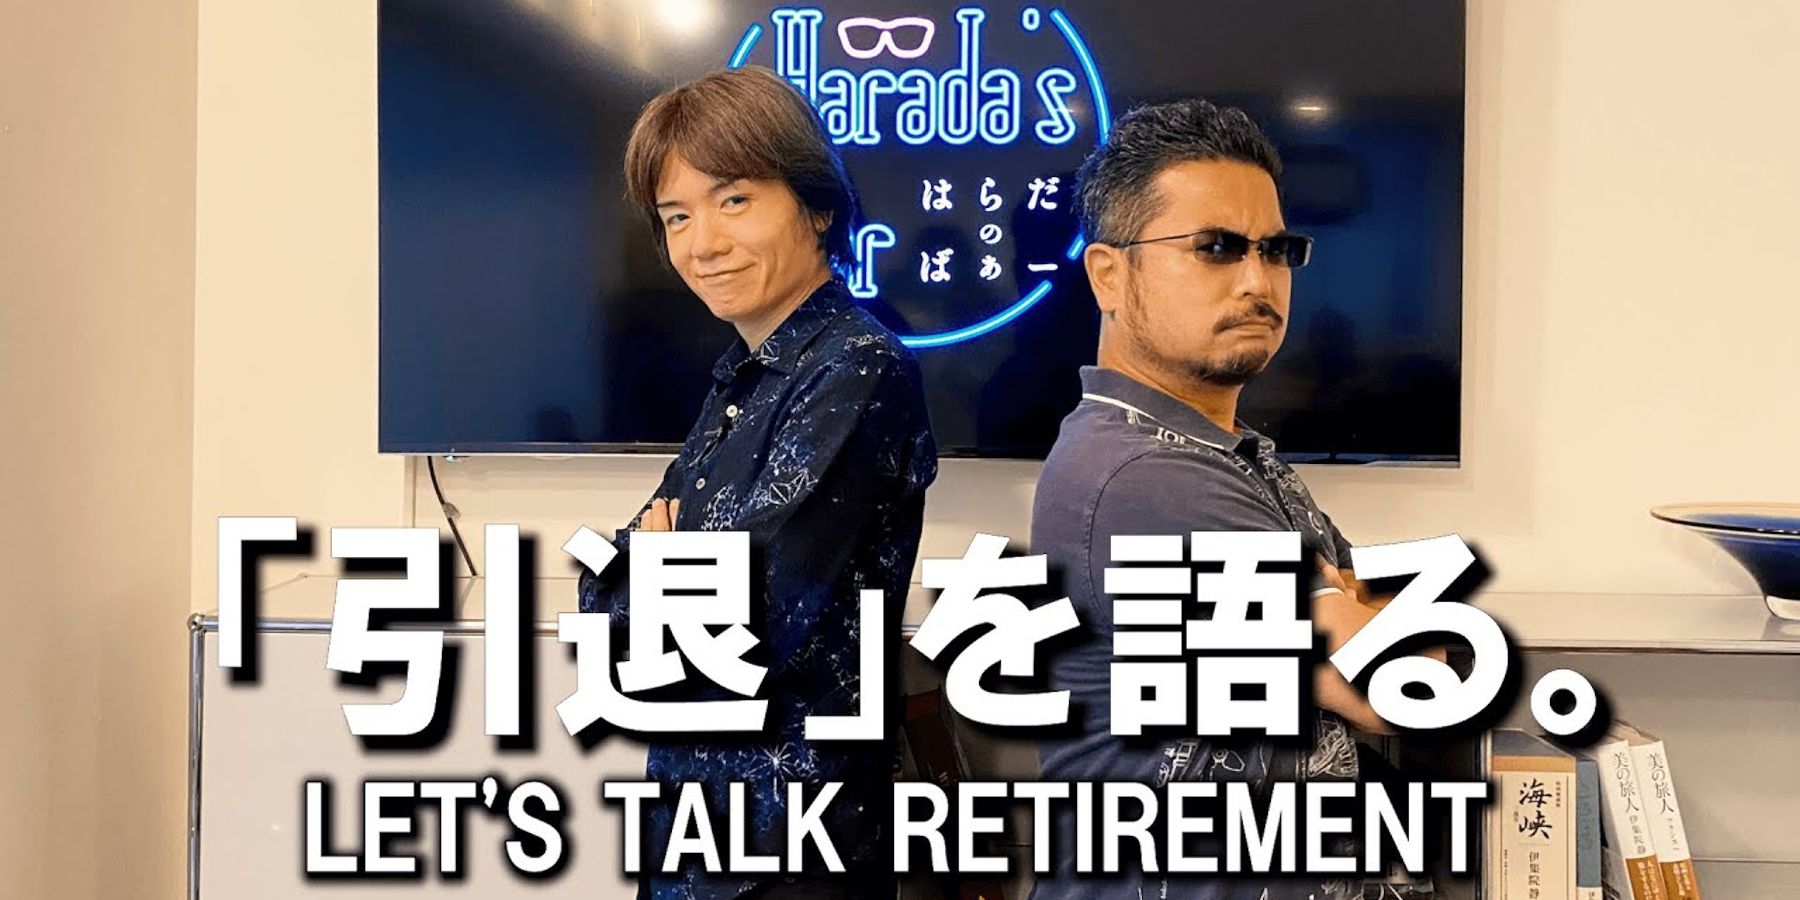 sakurai and harada interview retirement